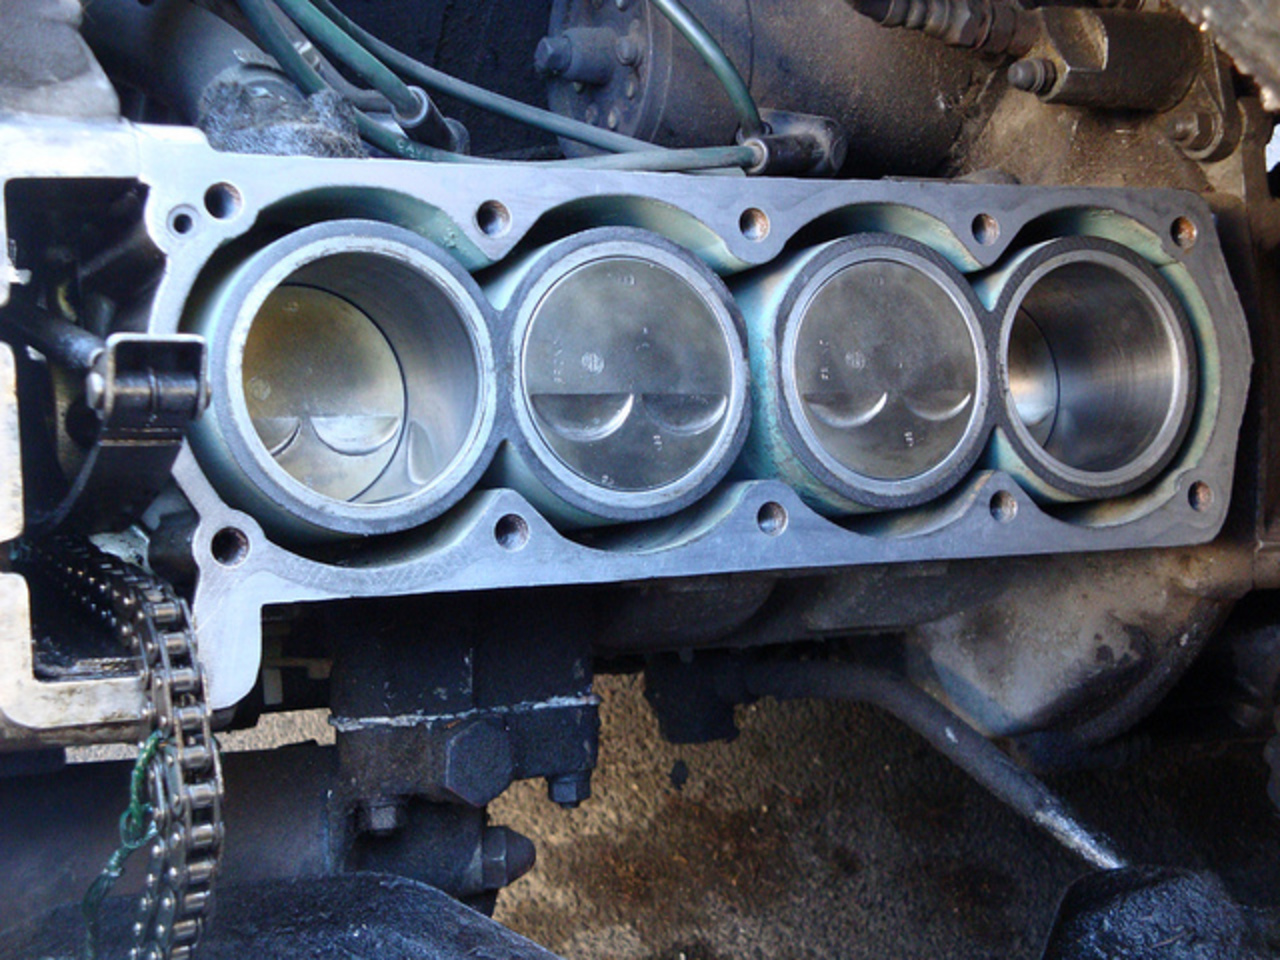 Hillman Imp 875 engine | Flickr - Photo Sharing!